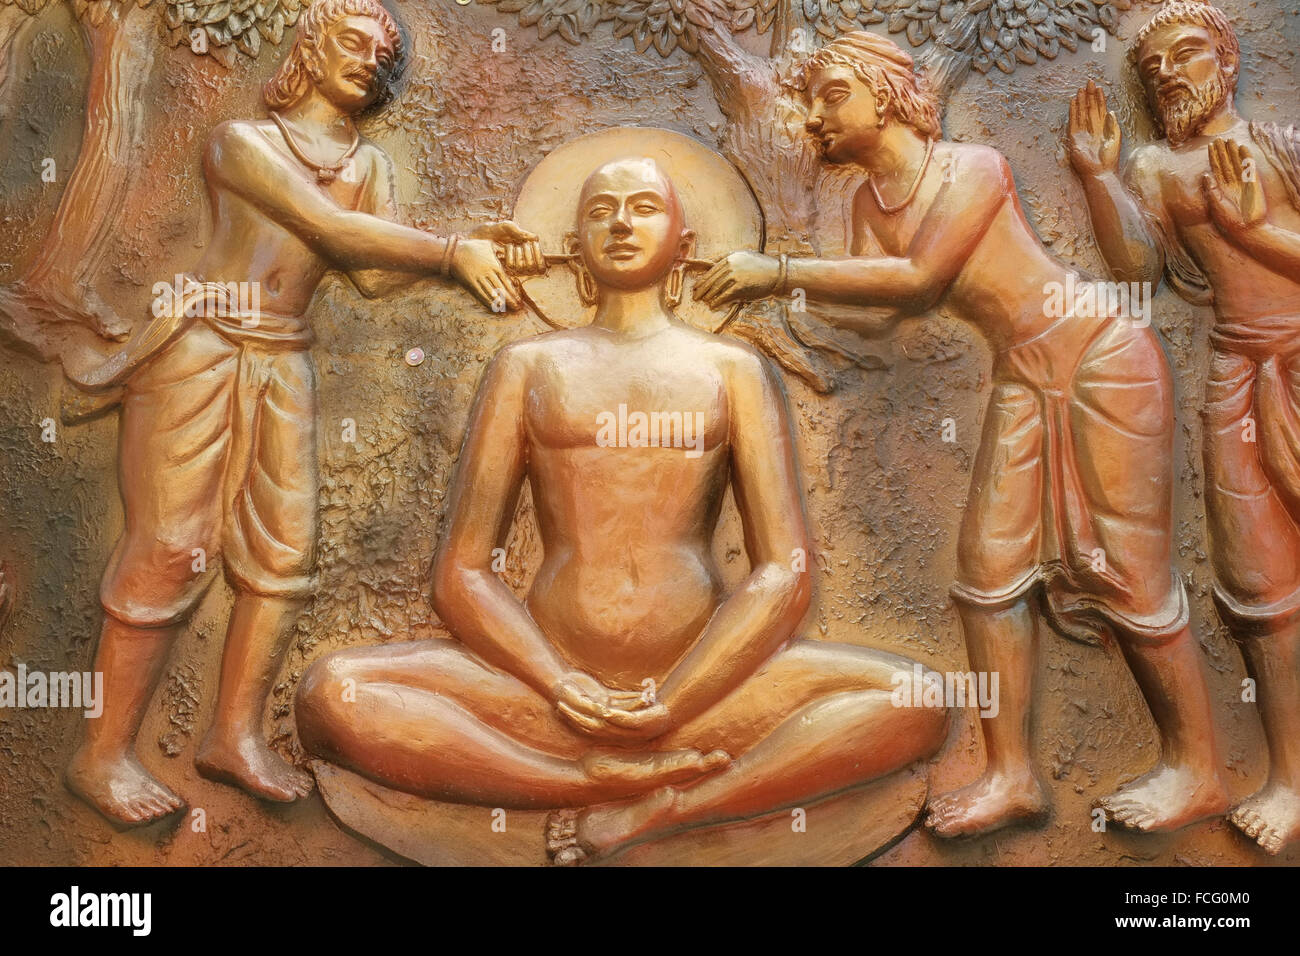 A sculptured panel outside the Sheetalnathji Jain Temple, Kolkata (Calcutta), West Bengal, India. Stock Photo